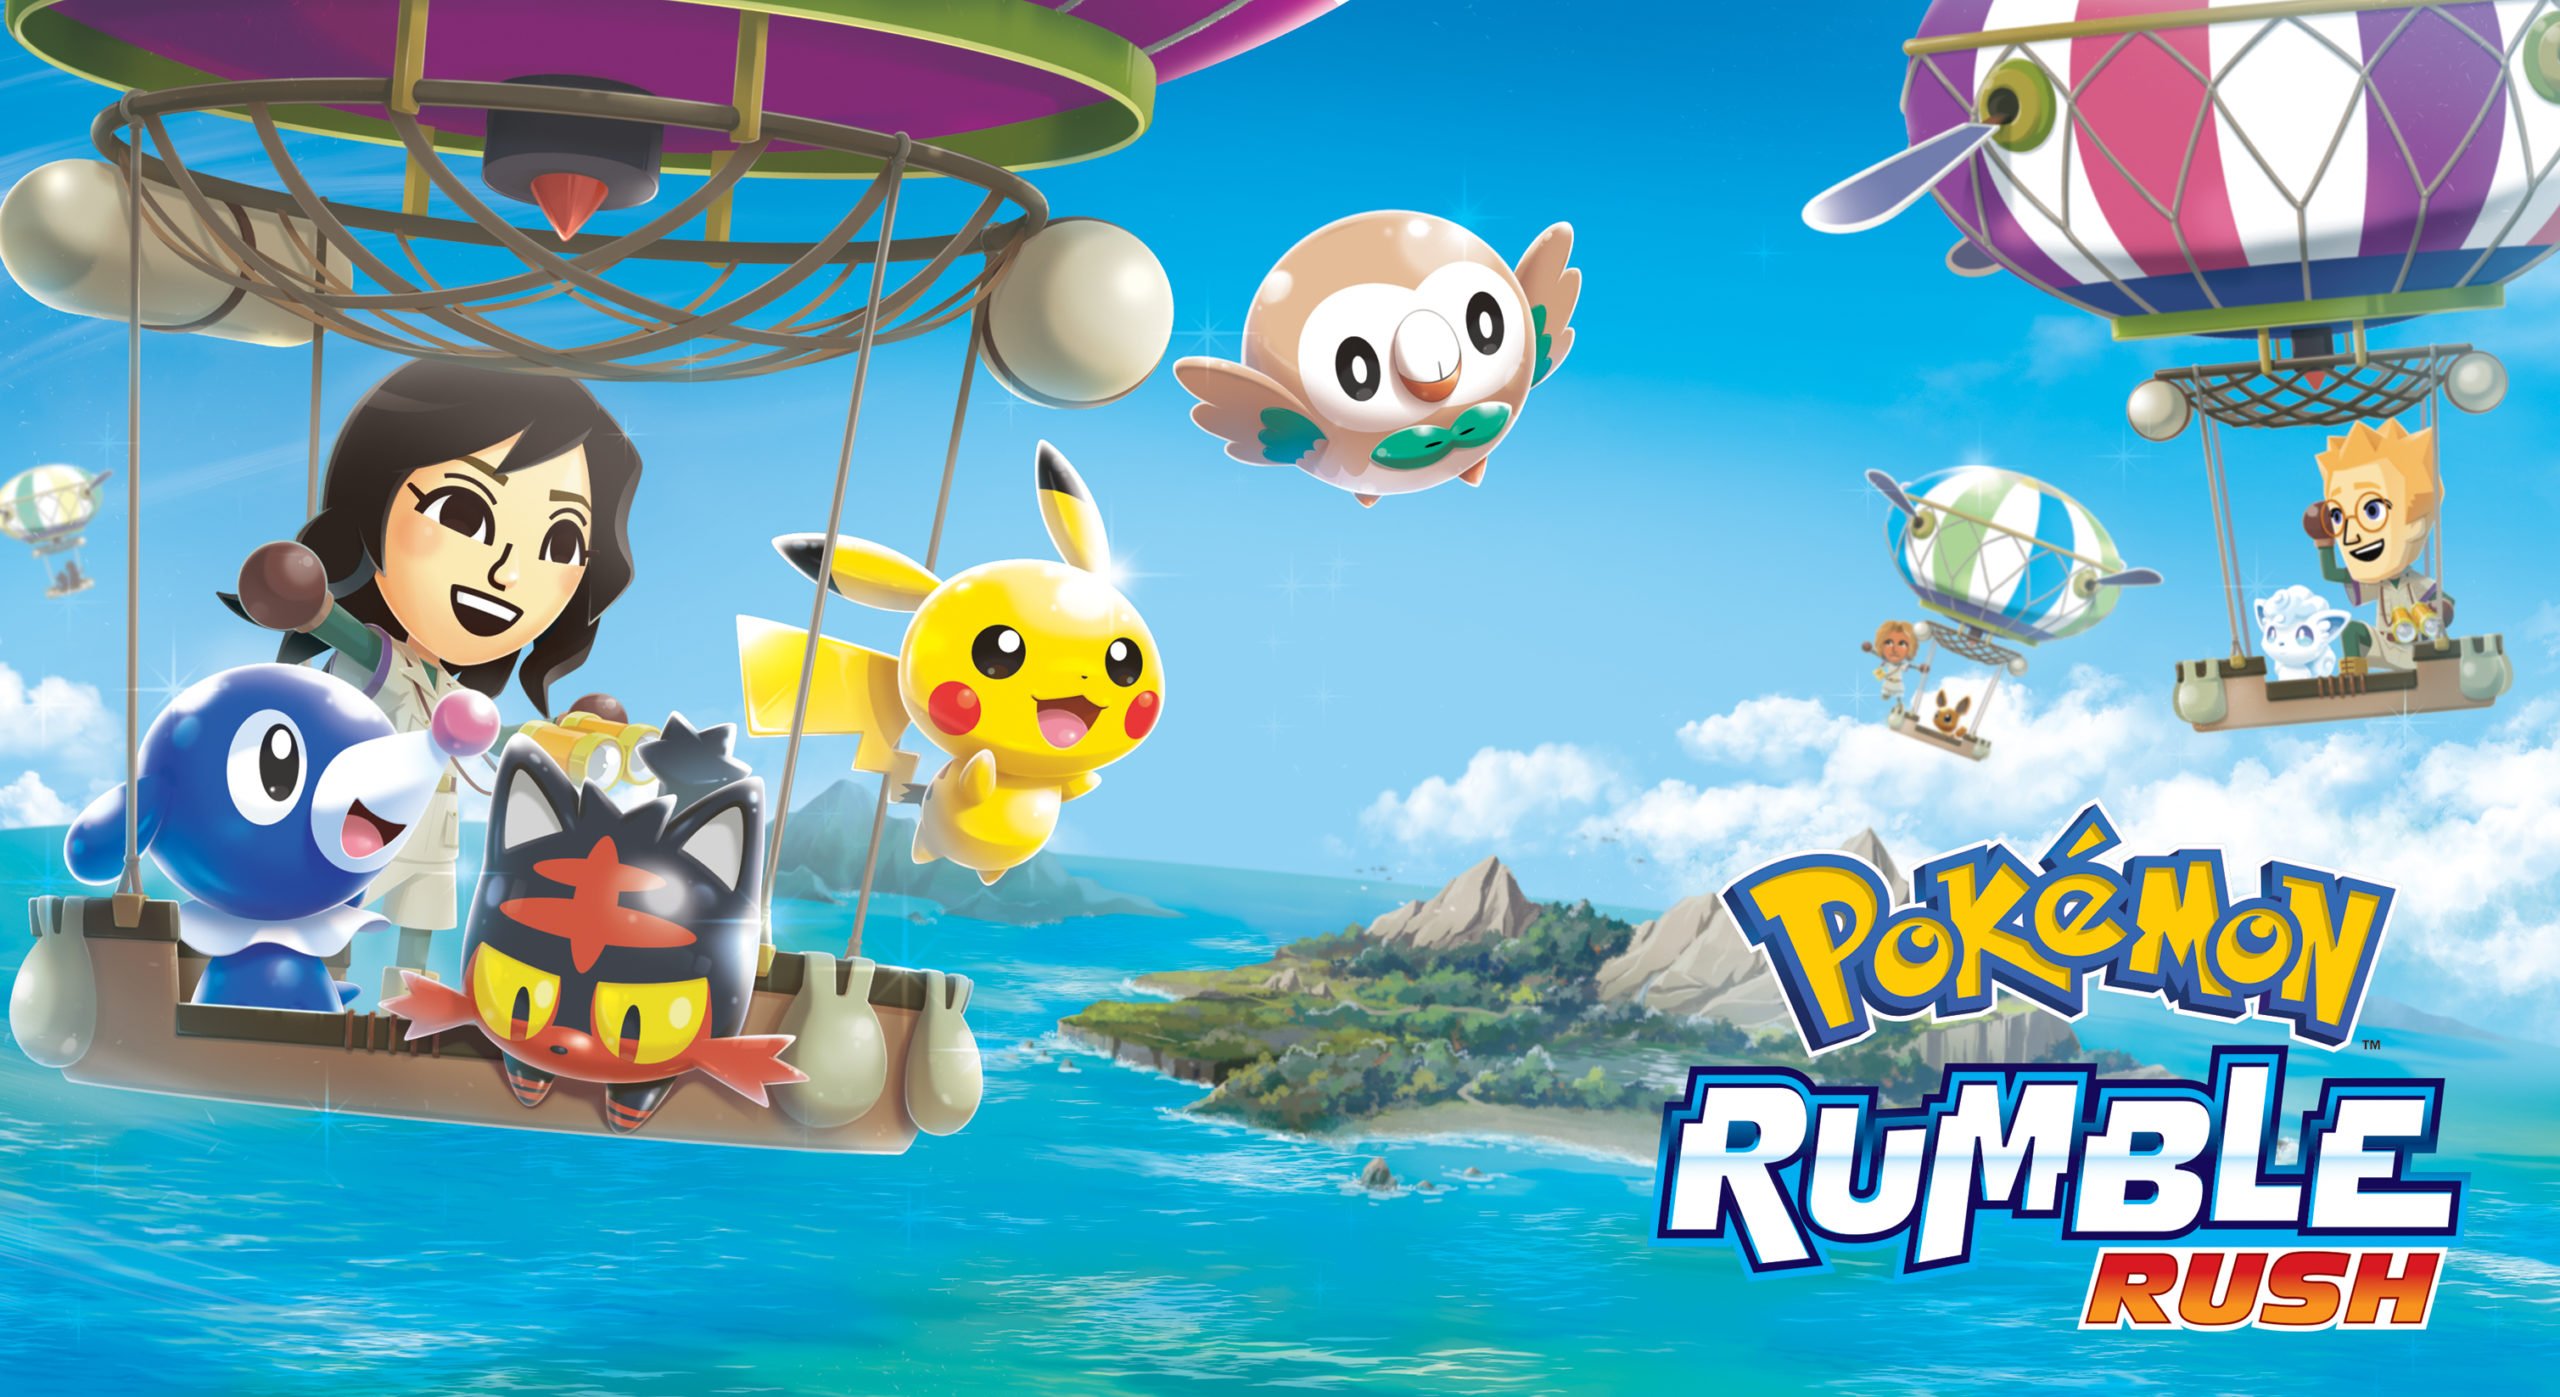 Pokémon Rumble Rush Announced for Mobile! Pokémon GO Hub